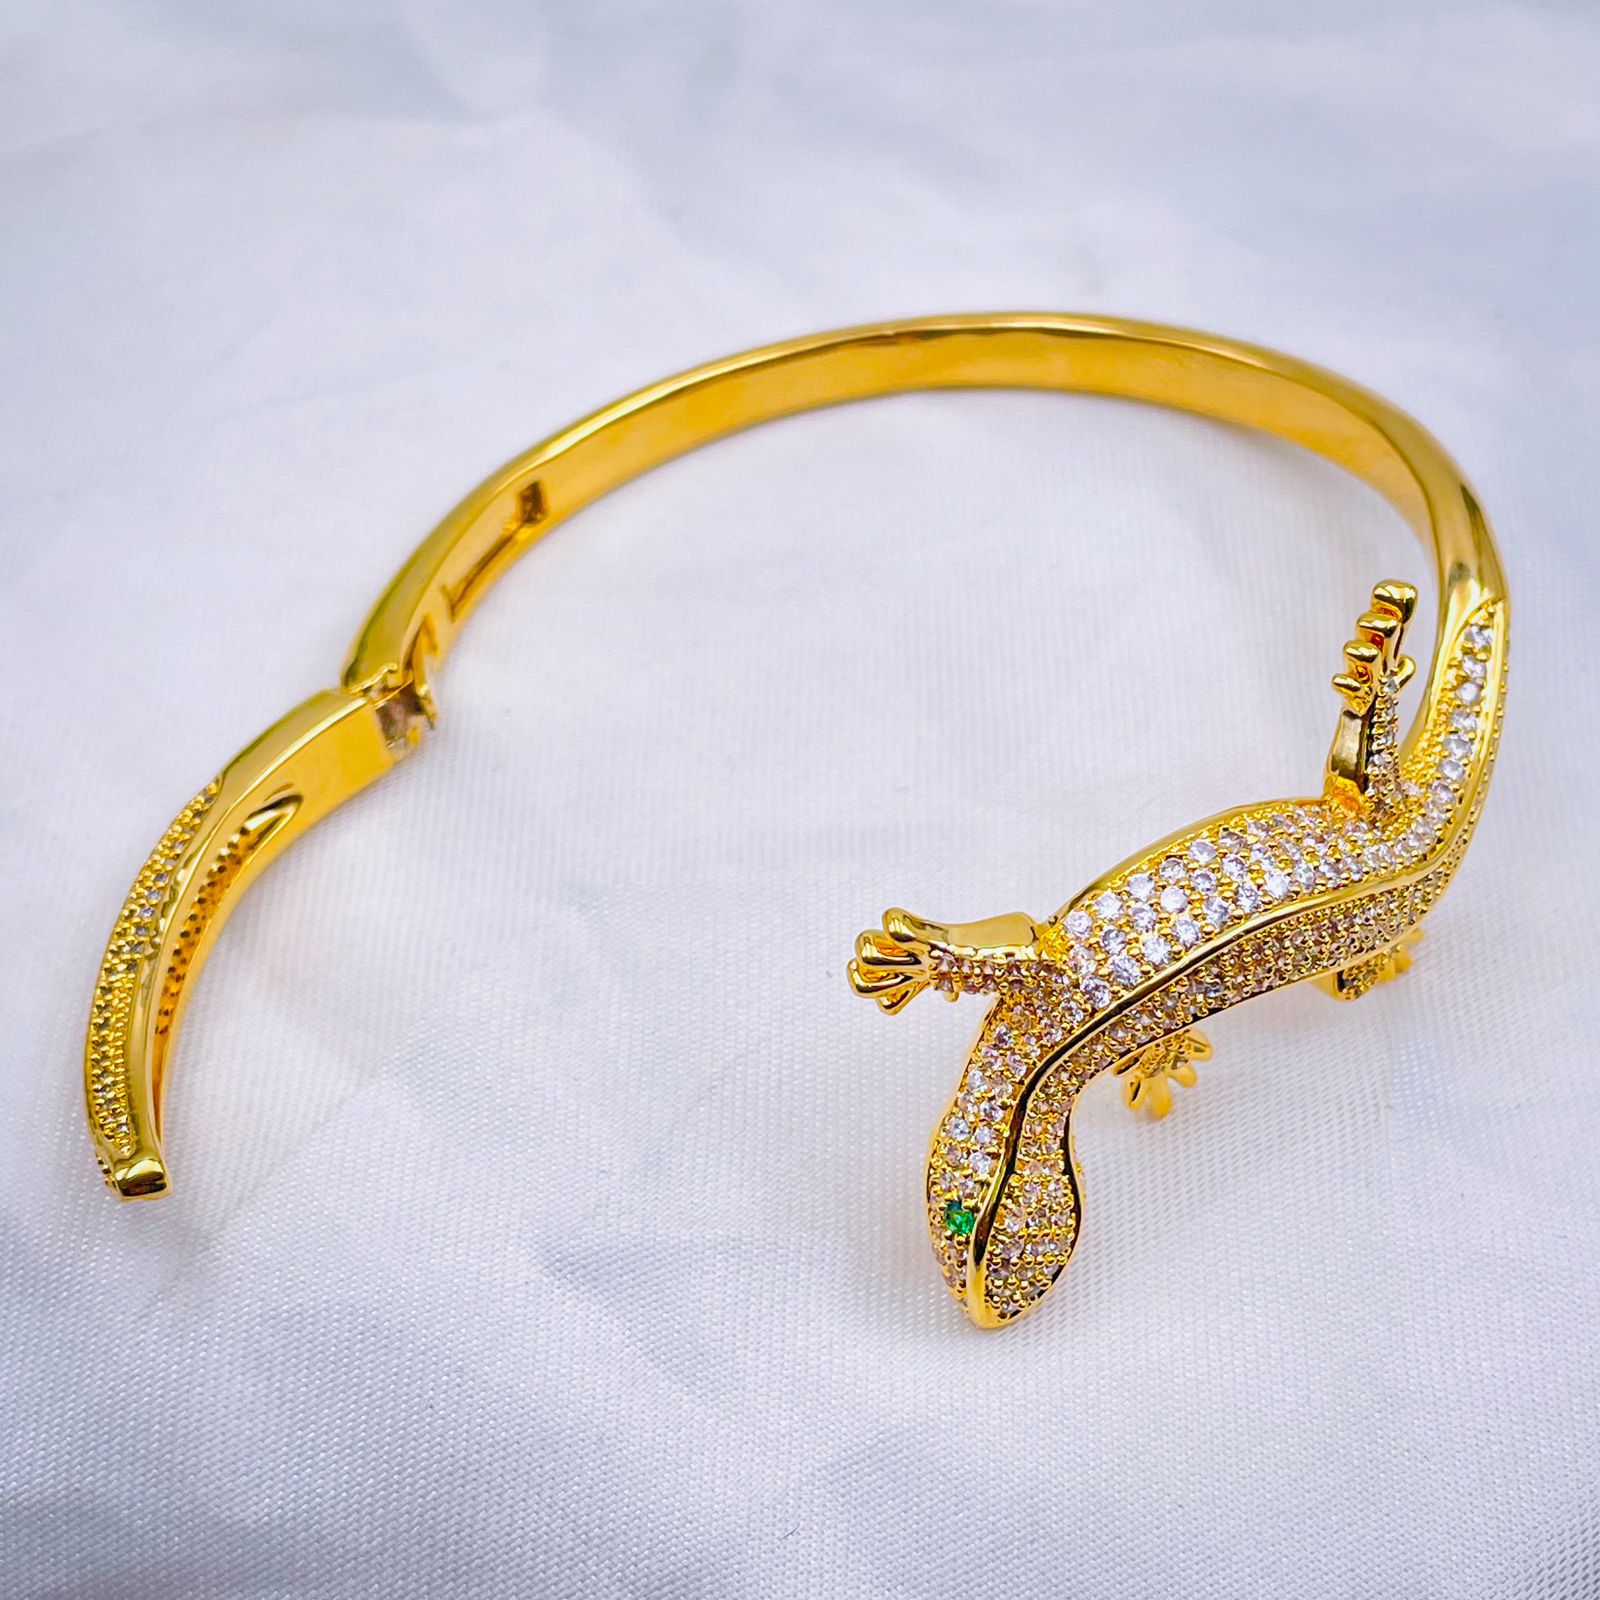 Buy Iguana Lizard Bracelet STERLING SILVER 925 Exclusive Design Handmade  Free Size Adjustable Heavy 52 Grams Online in India - Etsy